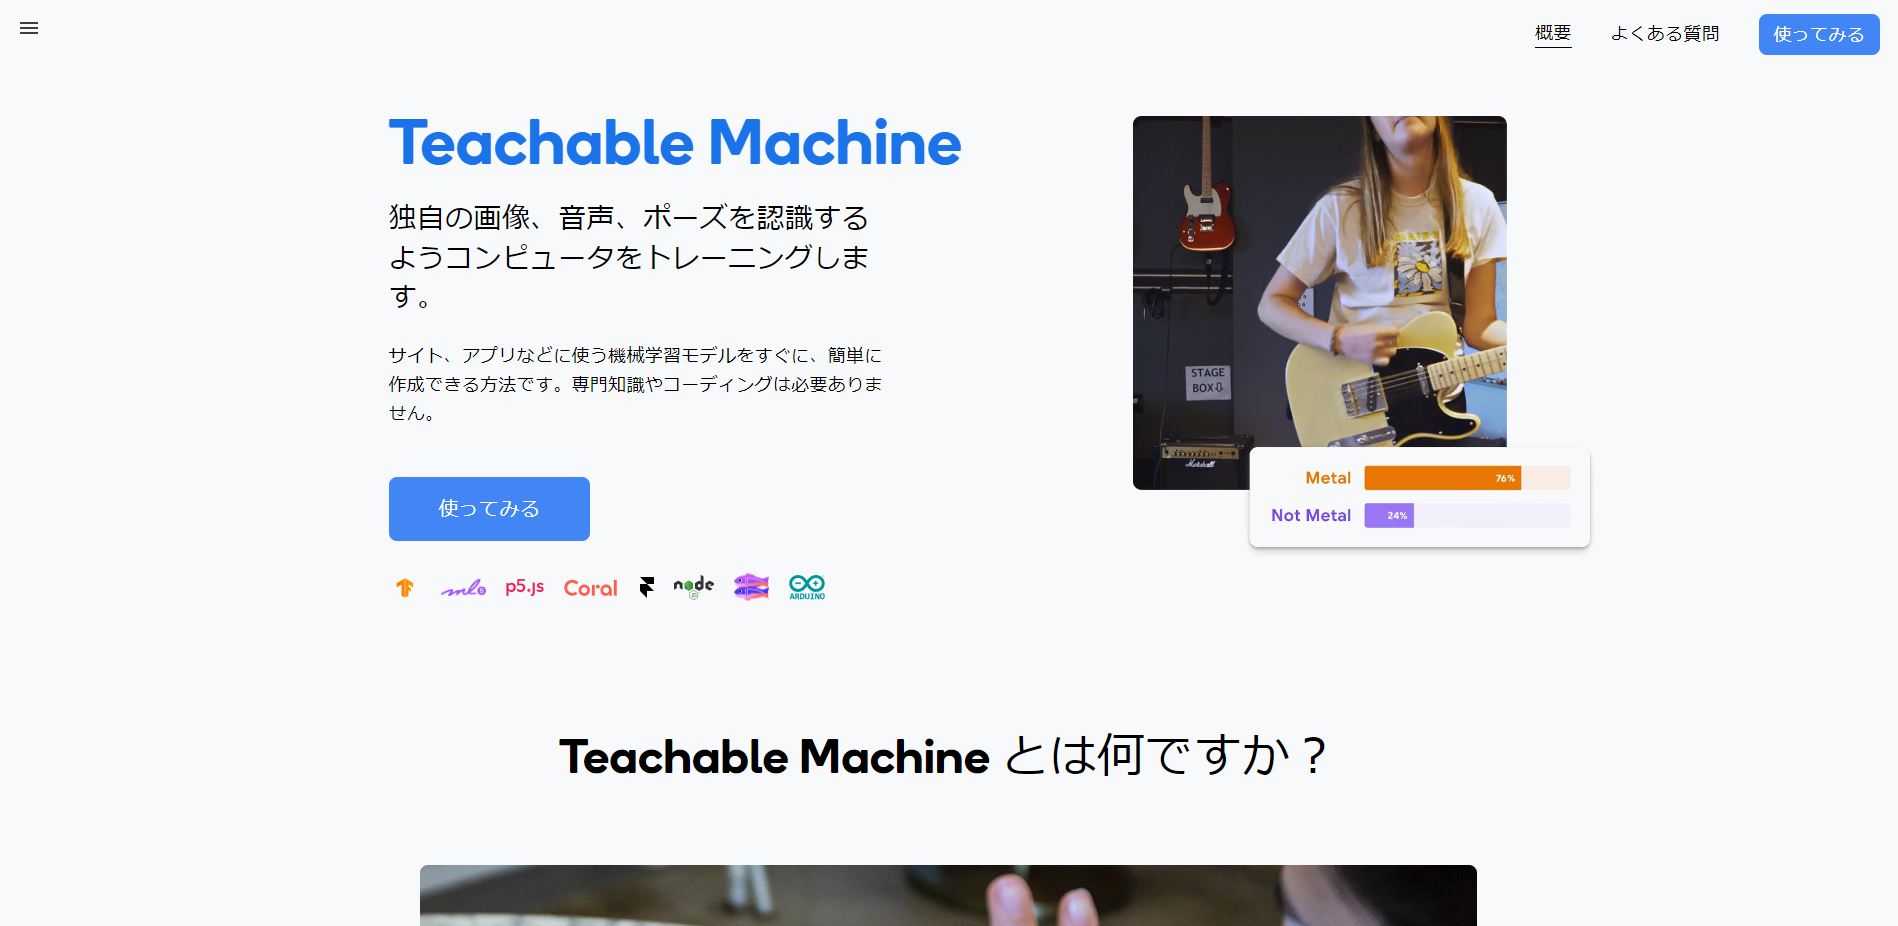 【AutoML】Google Teachable Machine の使い方を解説